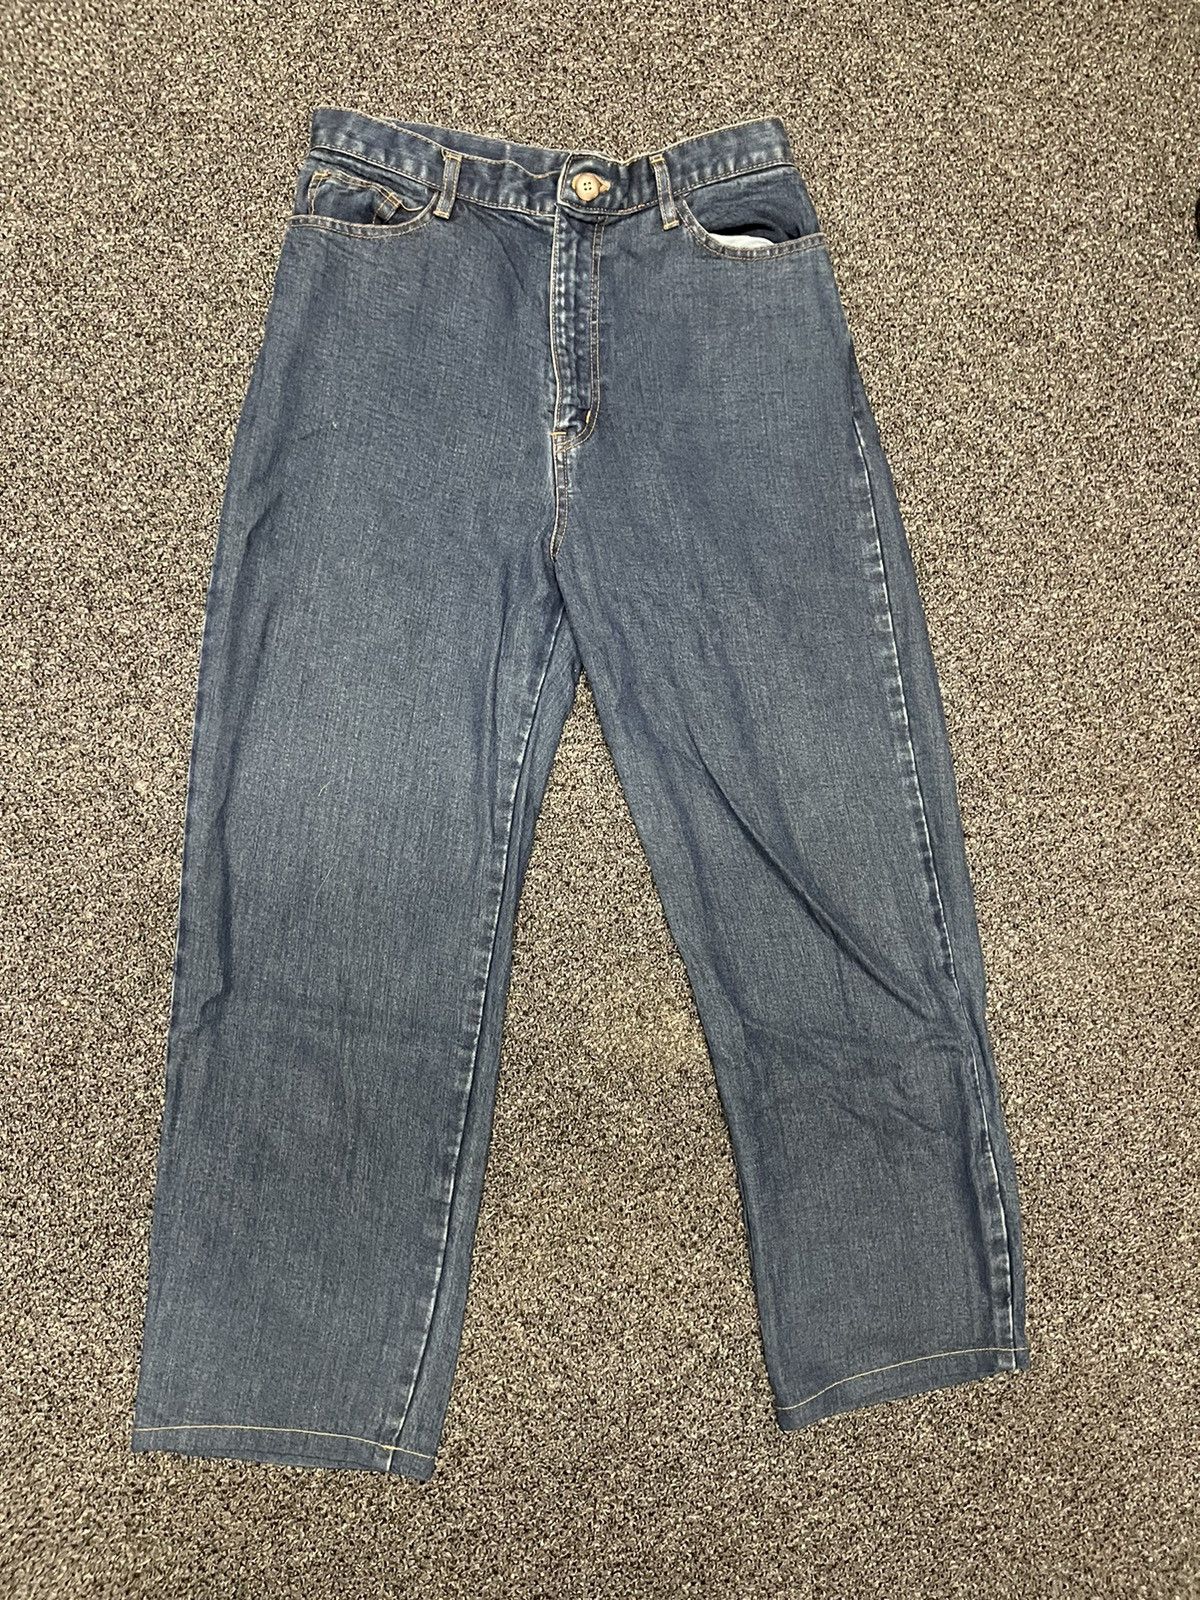 Vintage Vintage MCM Jeans | Grailed